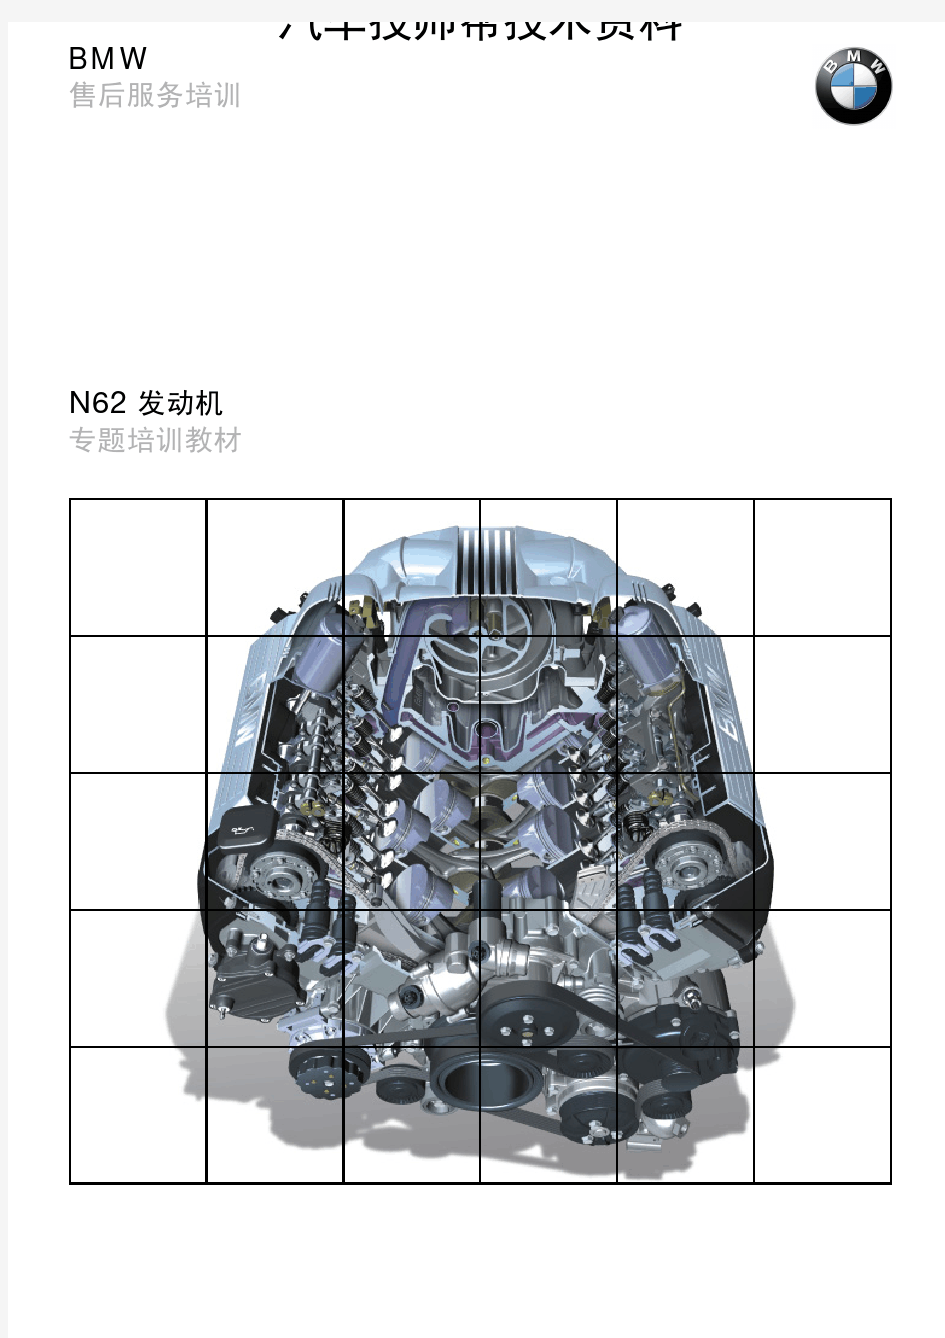 宝马7系维修维修手册(MFP-BRK-E65-N62-MOTOR-NG-Z)